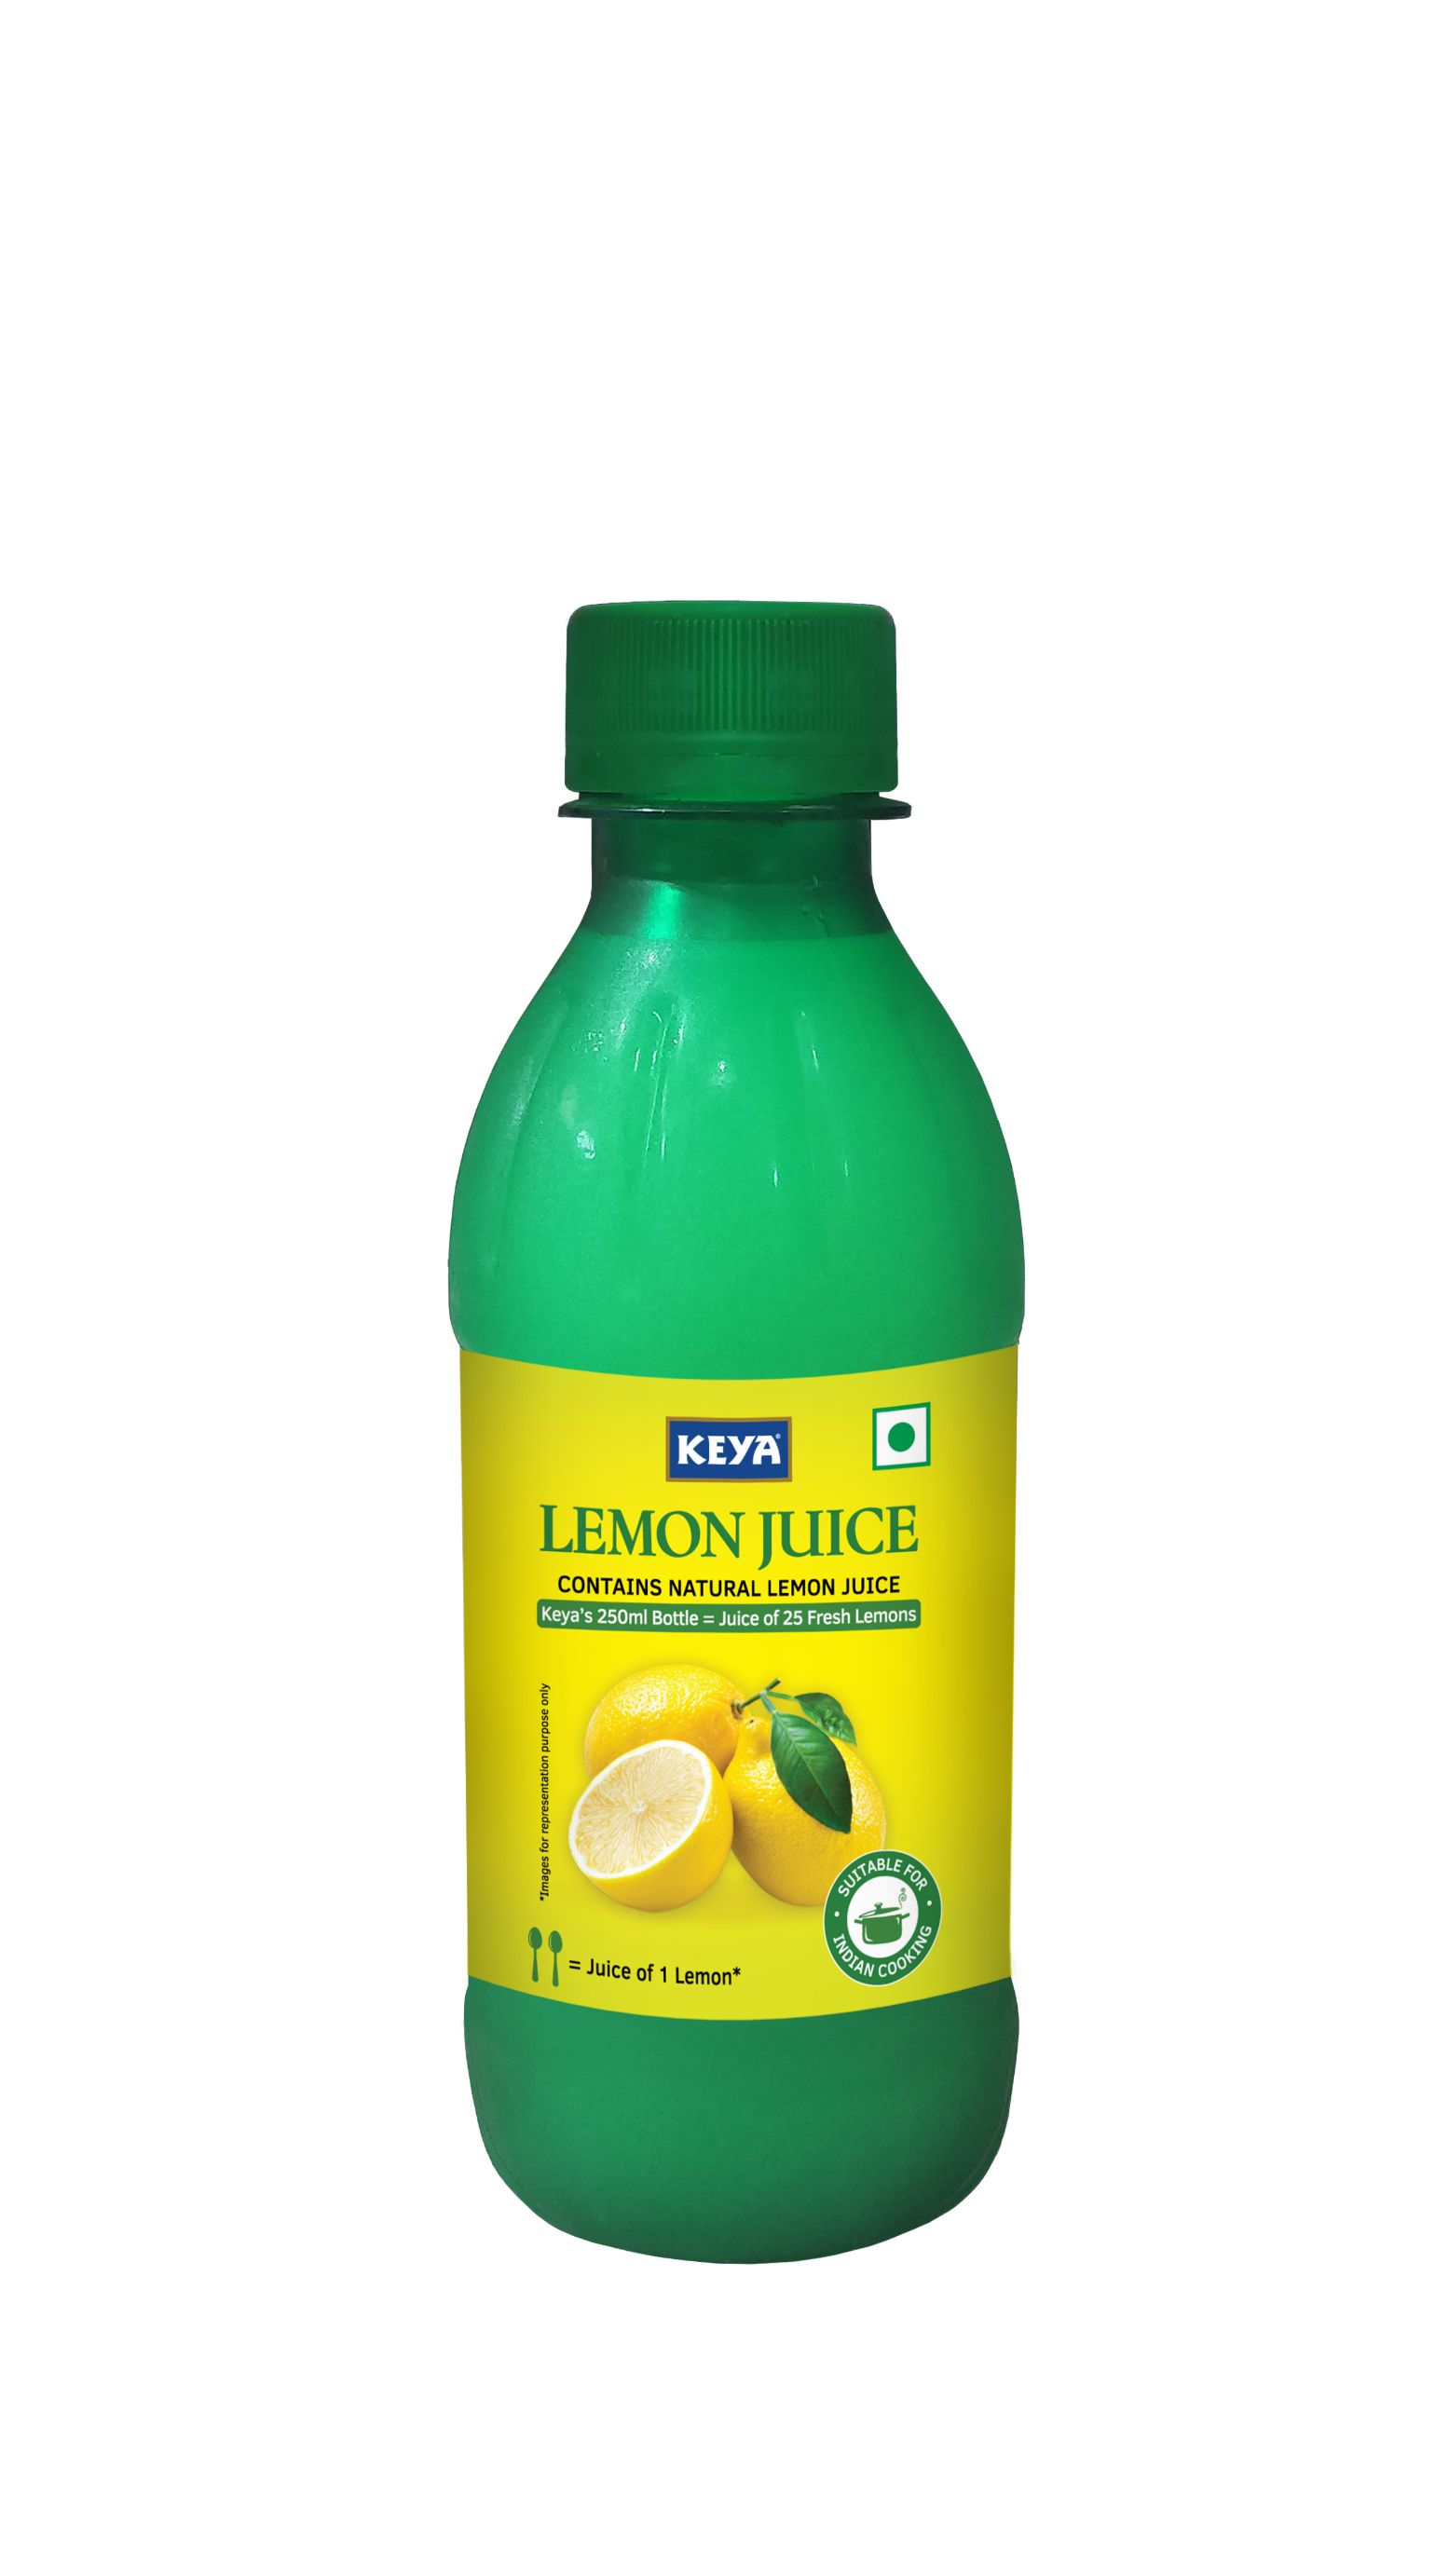 Keya Lemon Juice